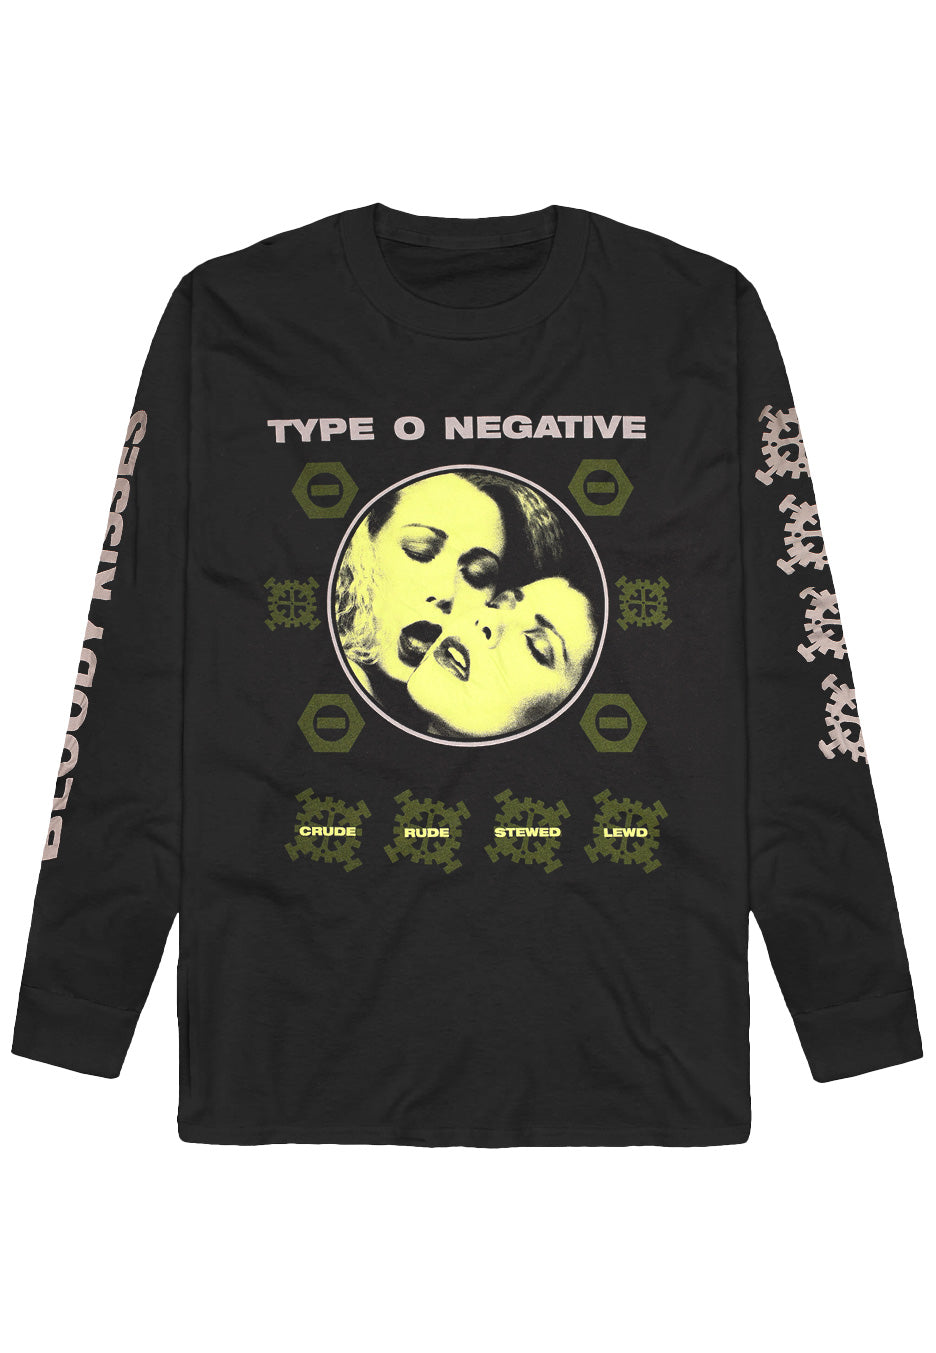 Type O Negative - Crude Gears Green - Longsleeve